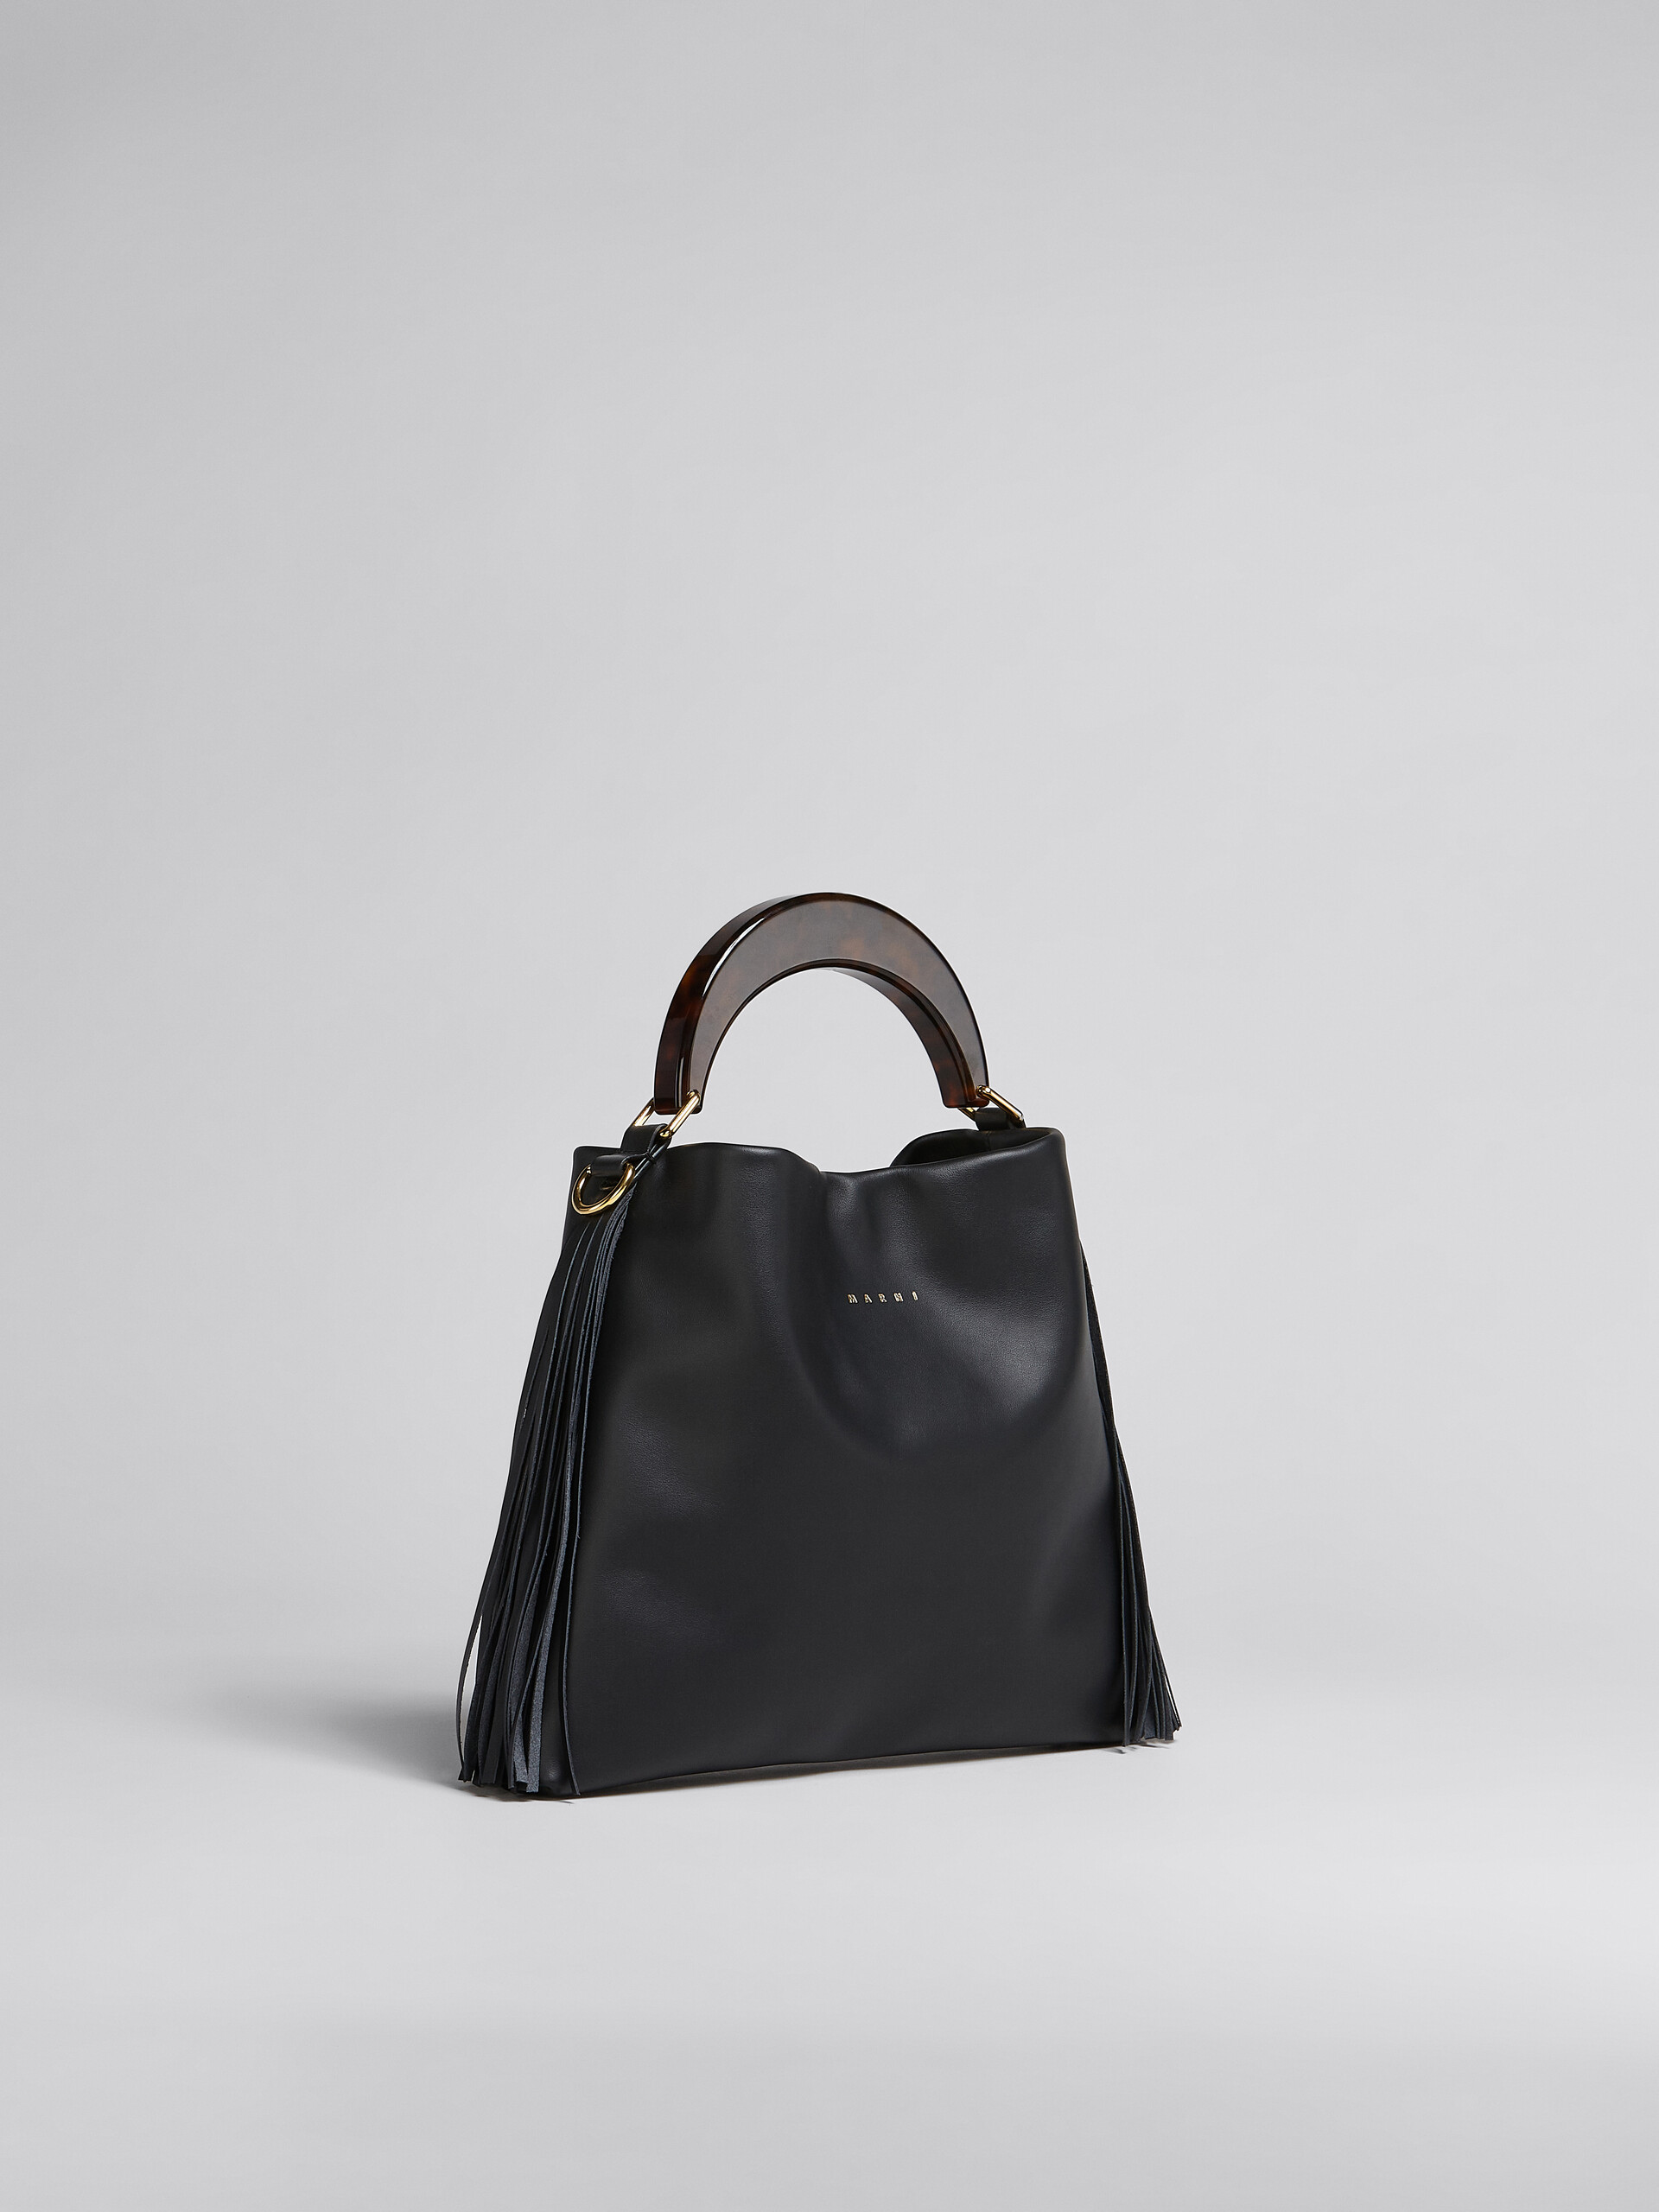 Venice Small Bag in black leather with fringes - Shoulder Bag - Image 6